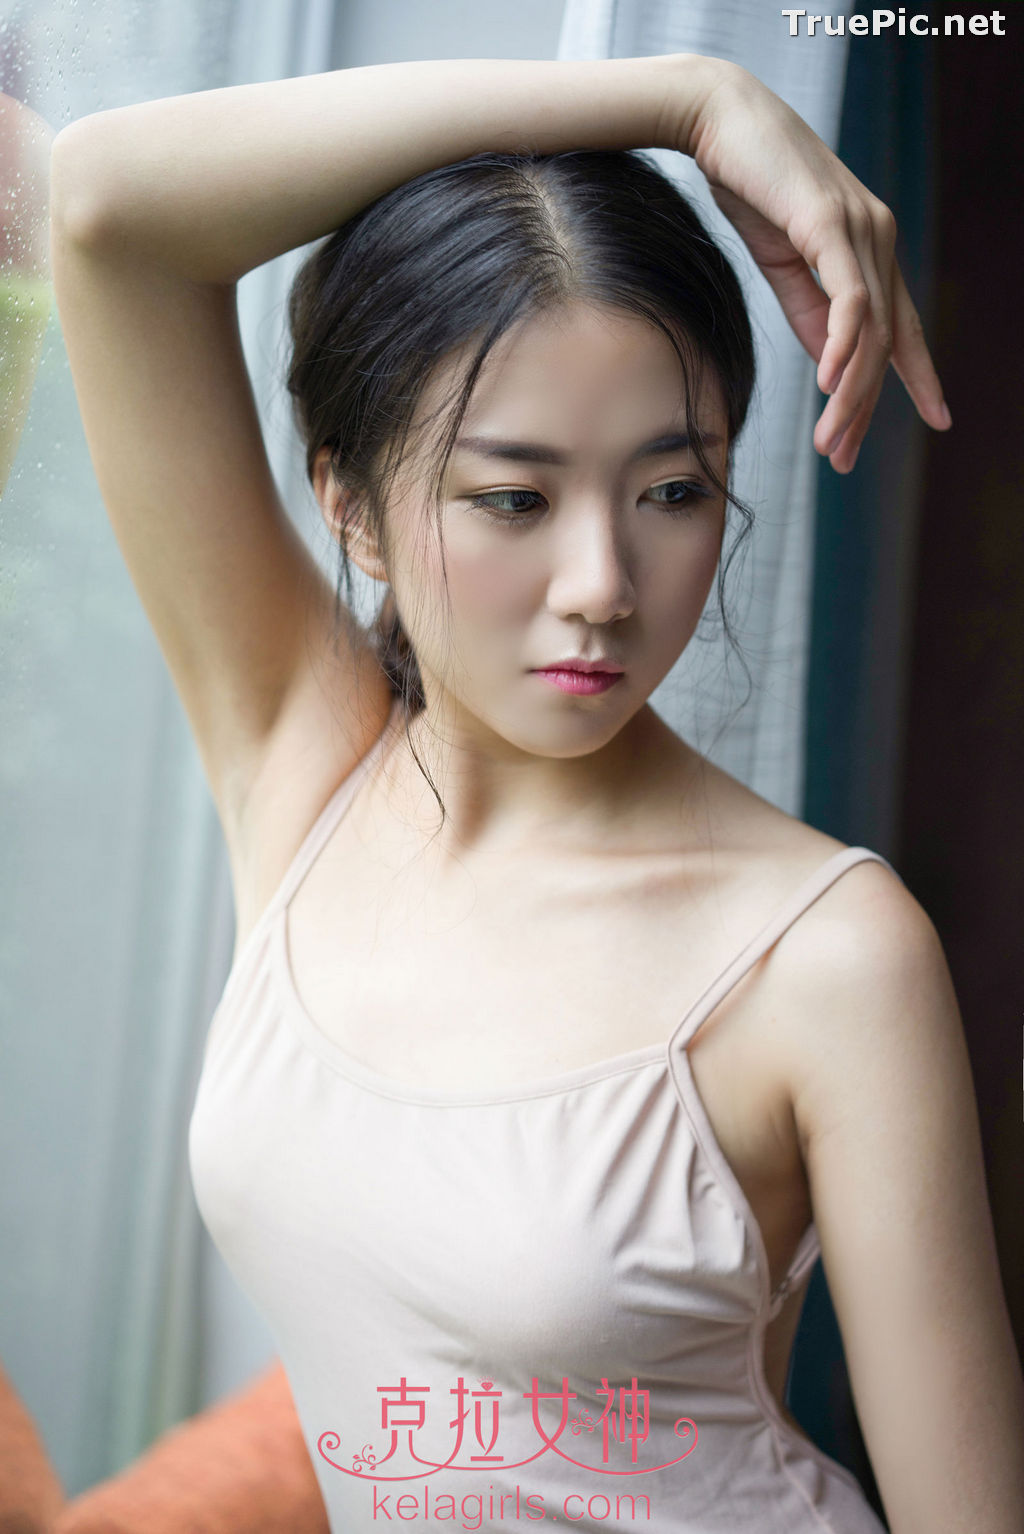 Image KelaGirls 克拉女神 – Chinese Model Ning Ning – Home School Girl Photo Album - TruePic.net - Picture-8